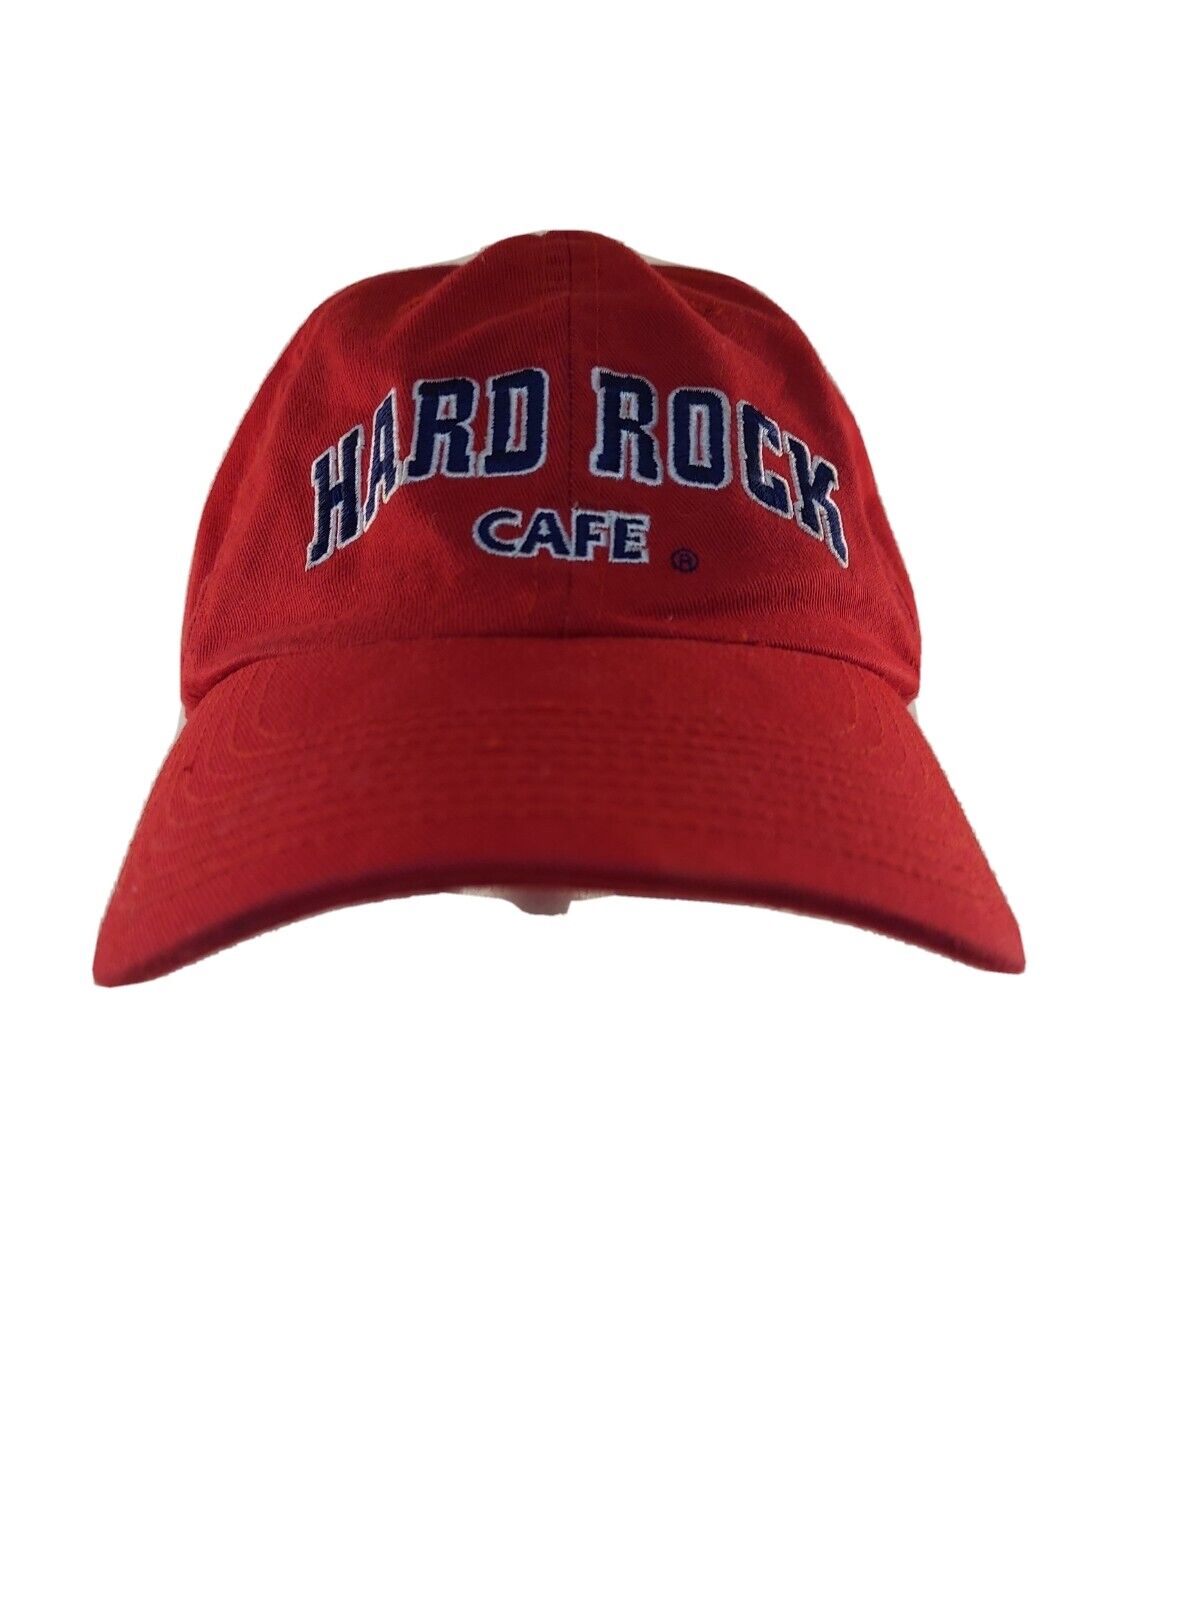 Hard Rock Cafe San Antonio Strapback 100% Cotton Red One Size